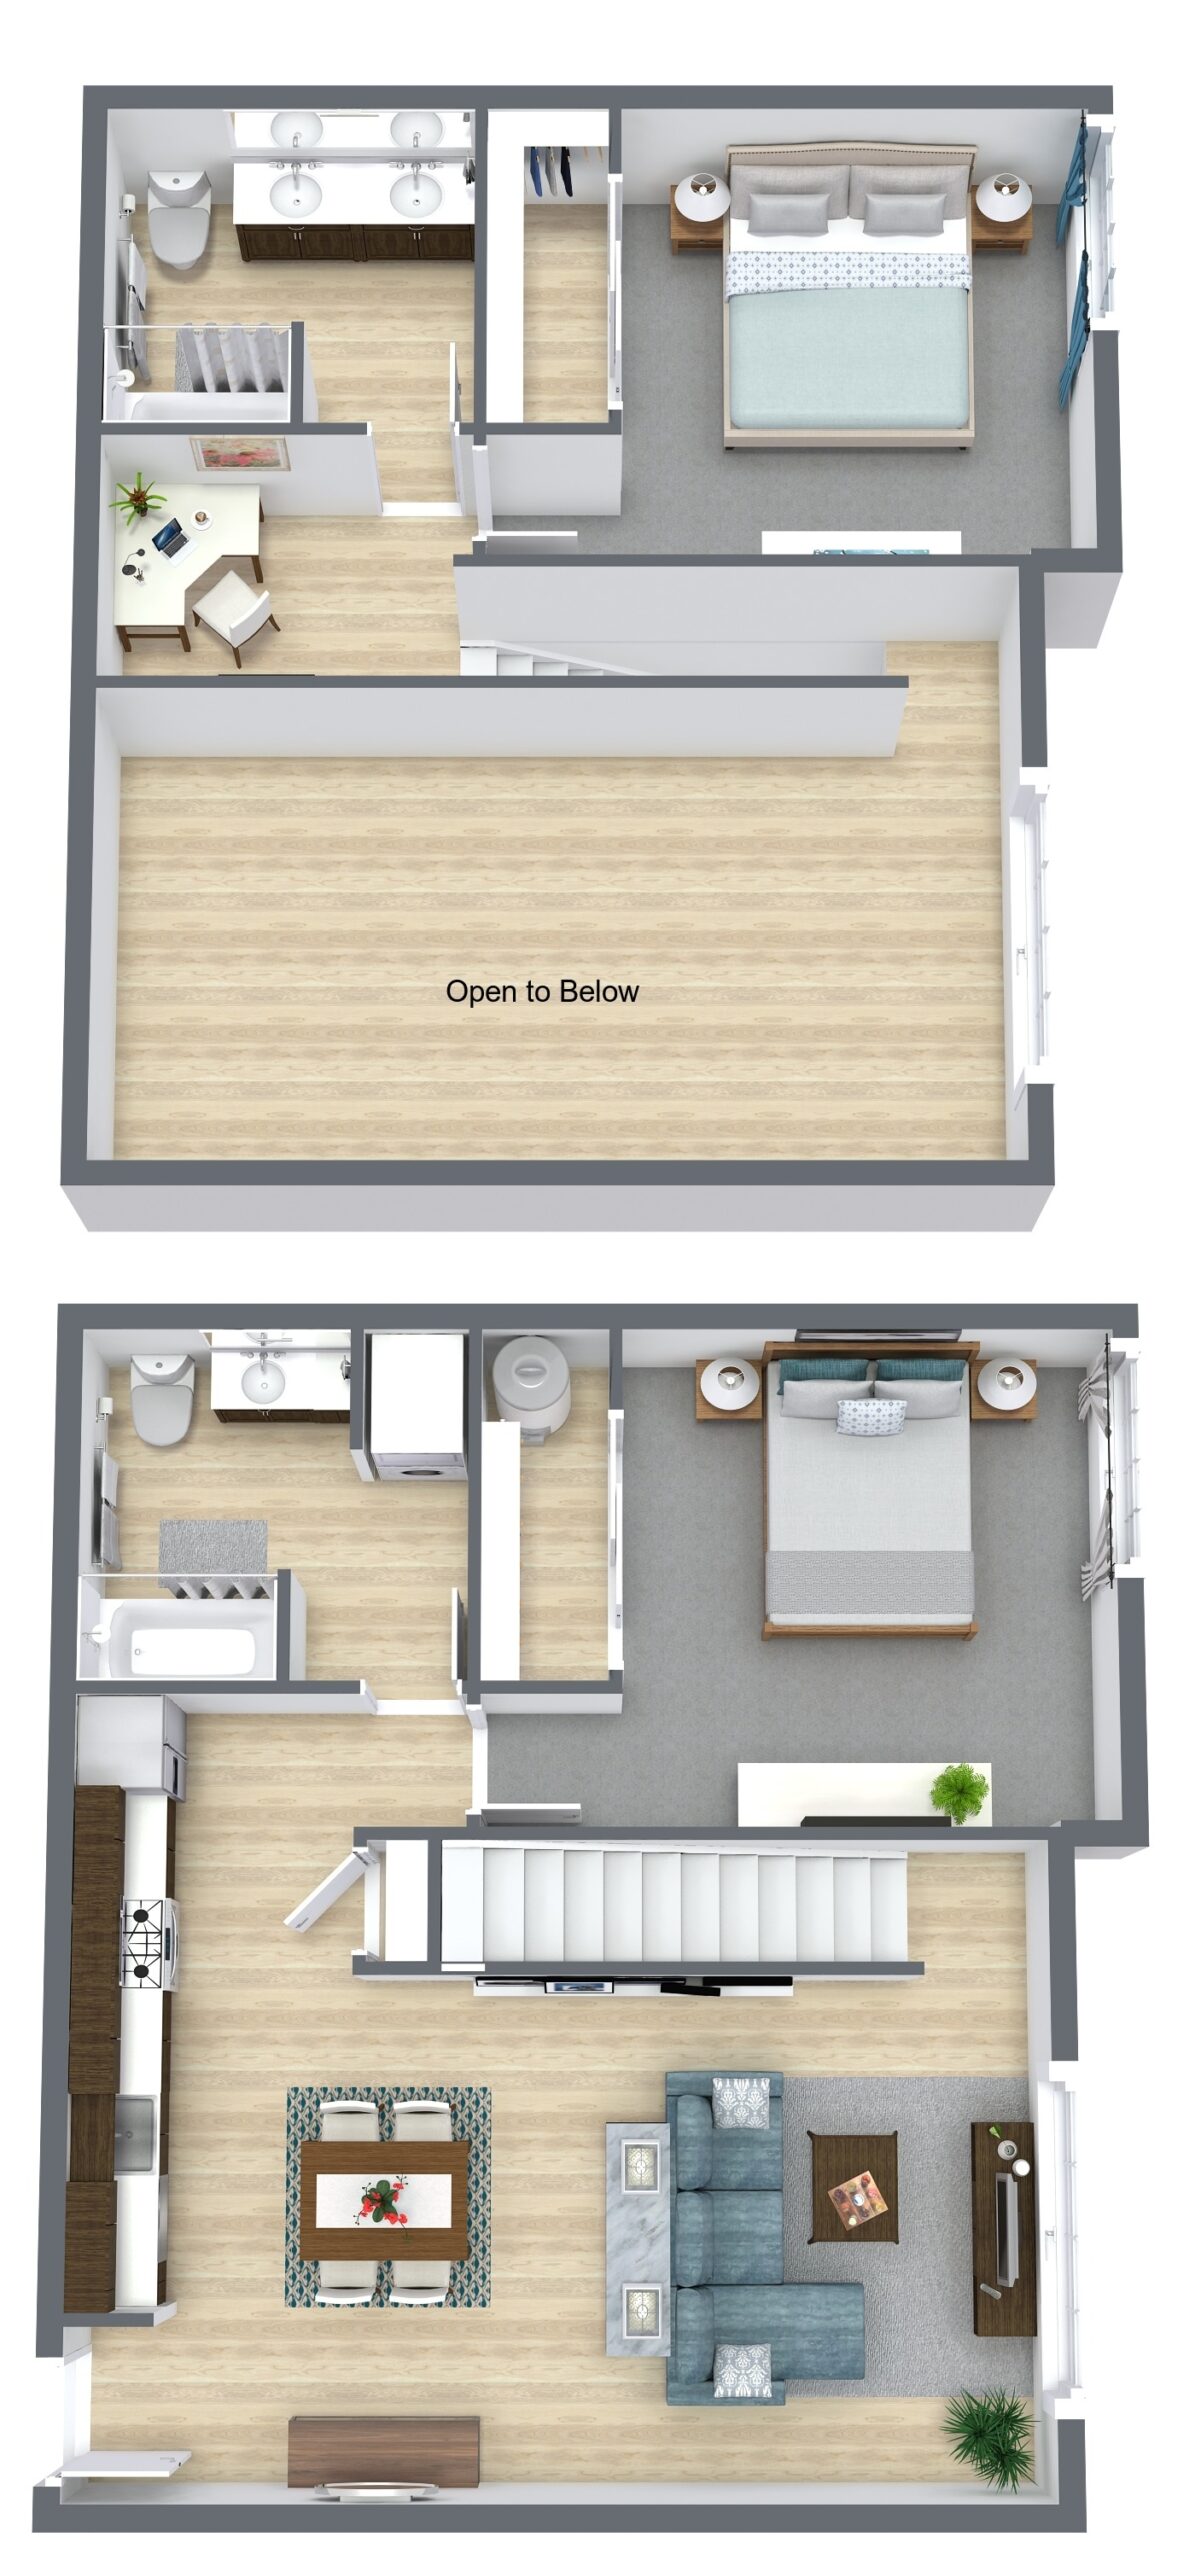 2 BEDROOM E TOWNHOME<BR>2 Bedroom + 2 Bath<br>1151-1218 sq ft